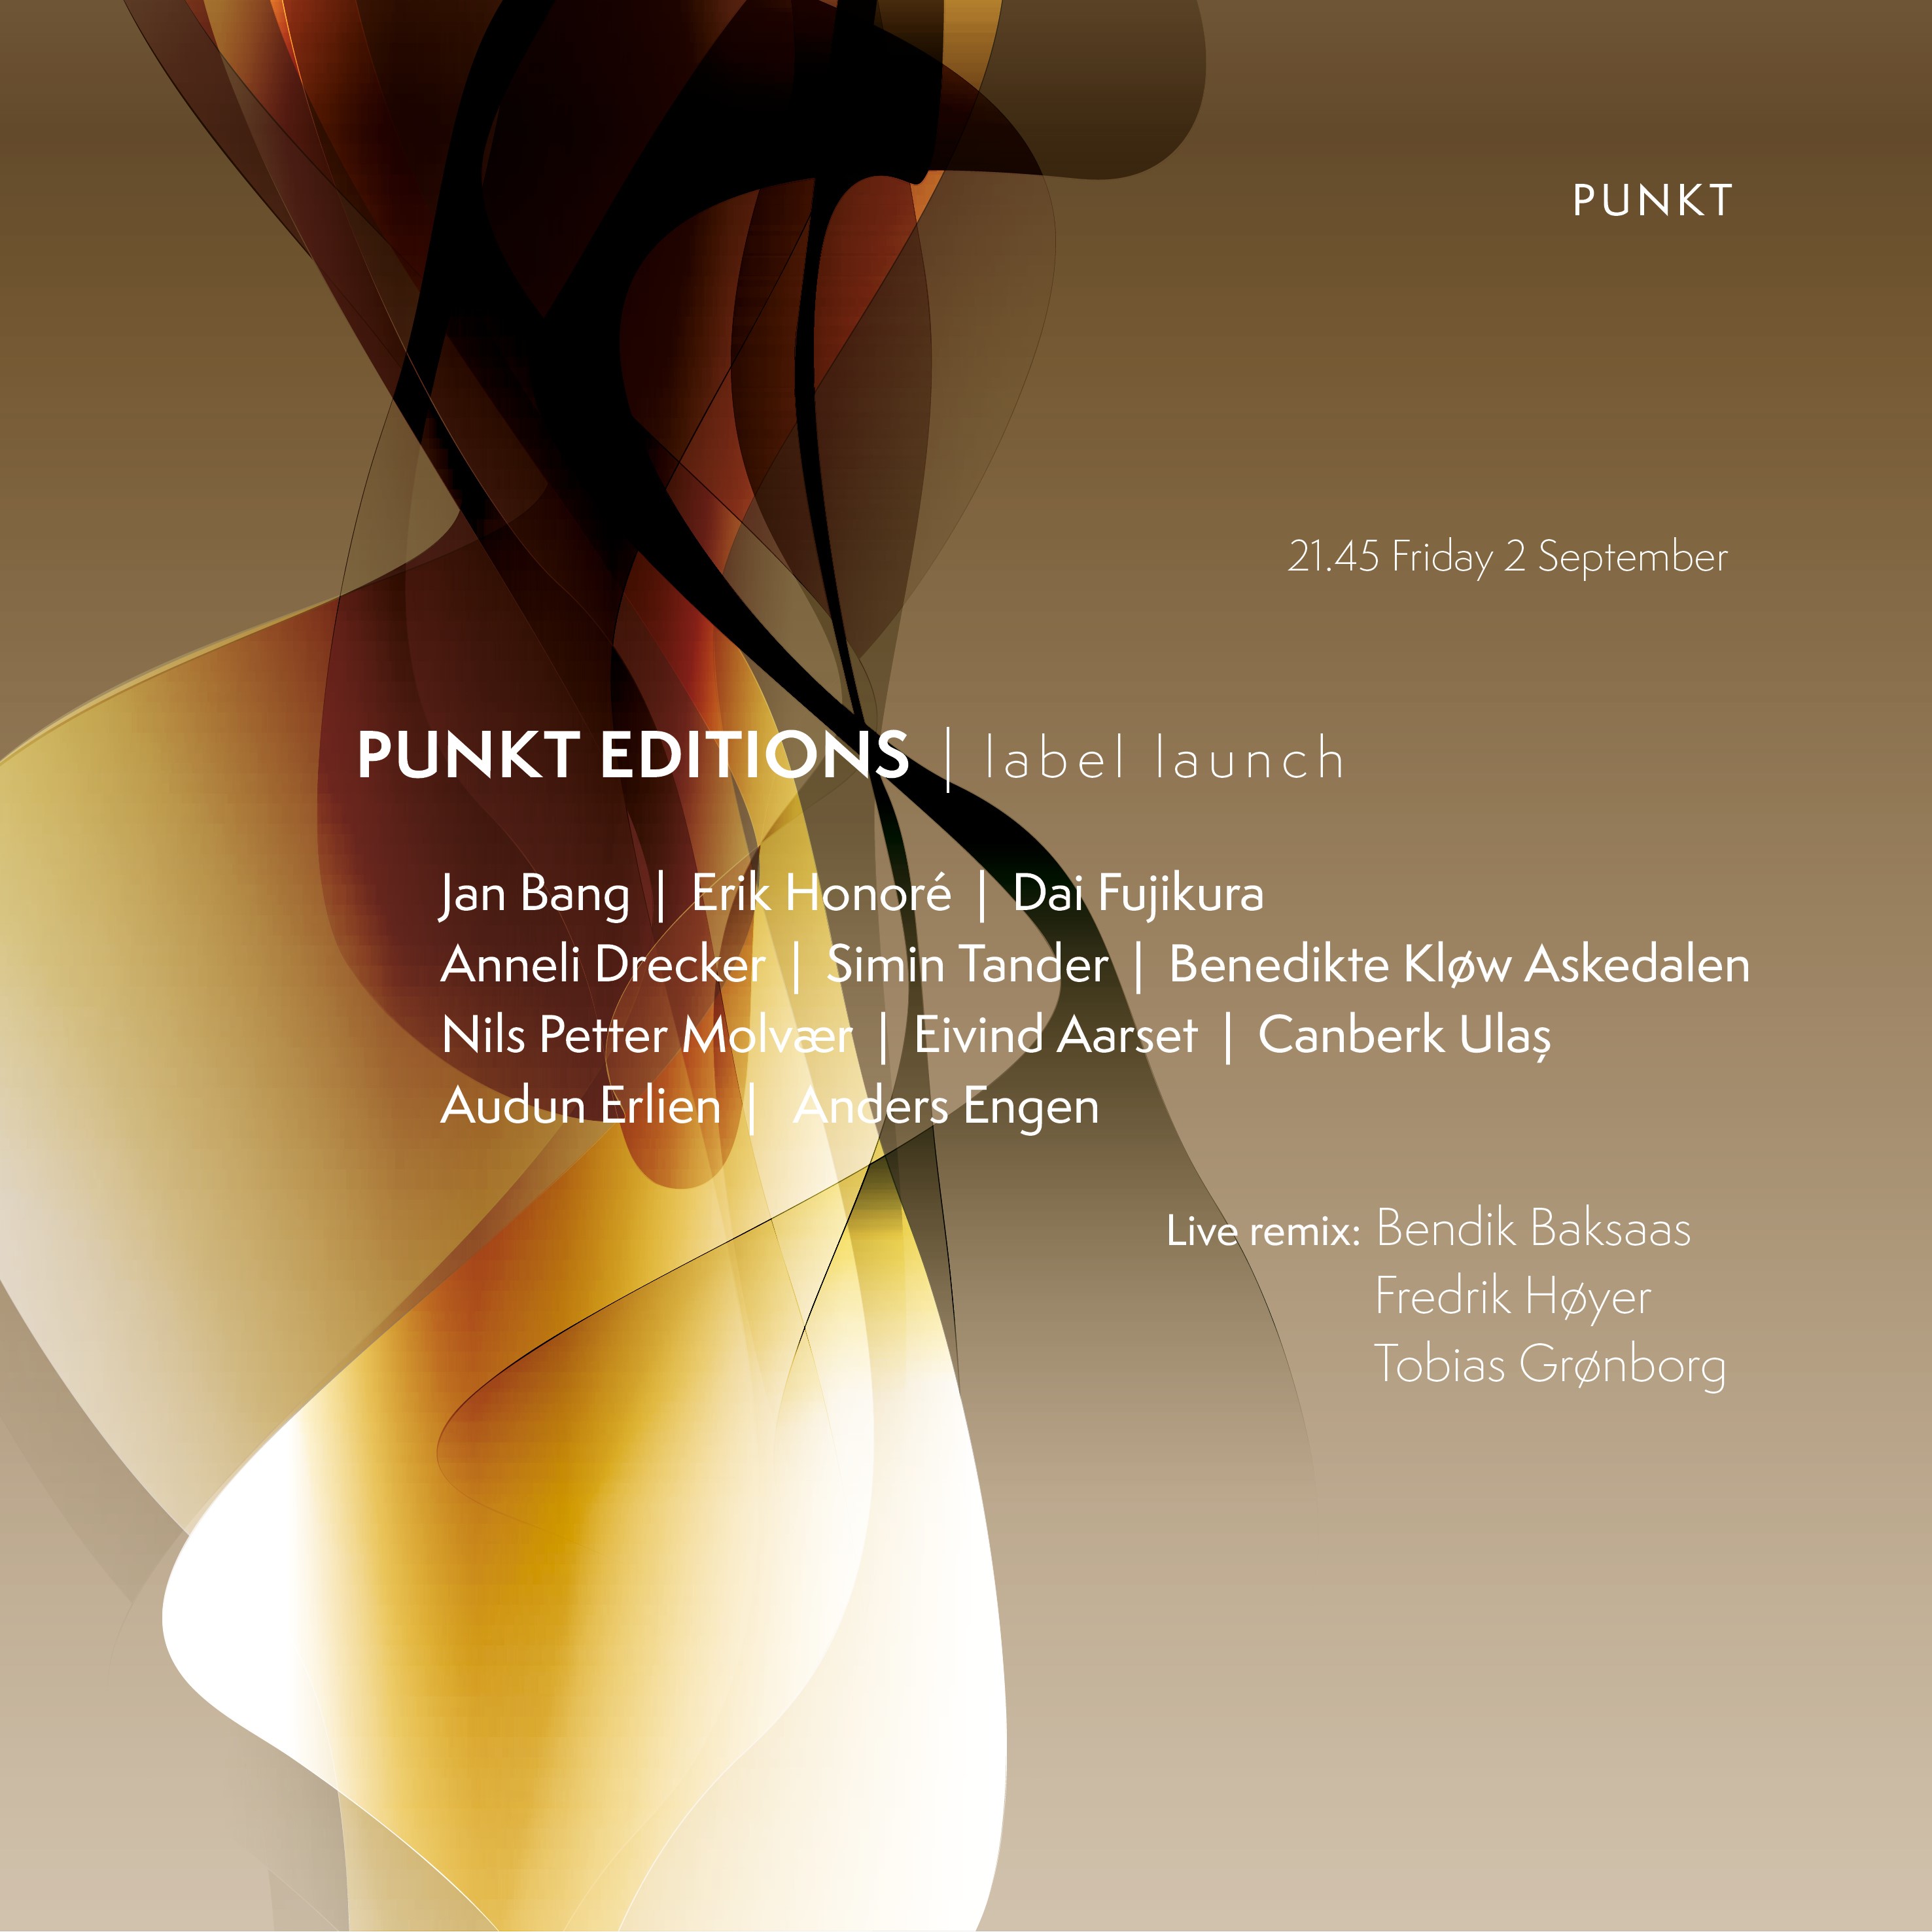 PUNKT EDITIONS | label launch